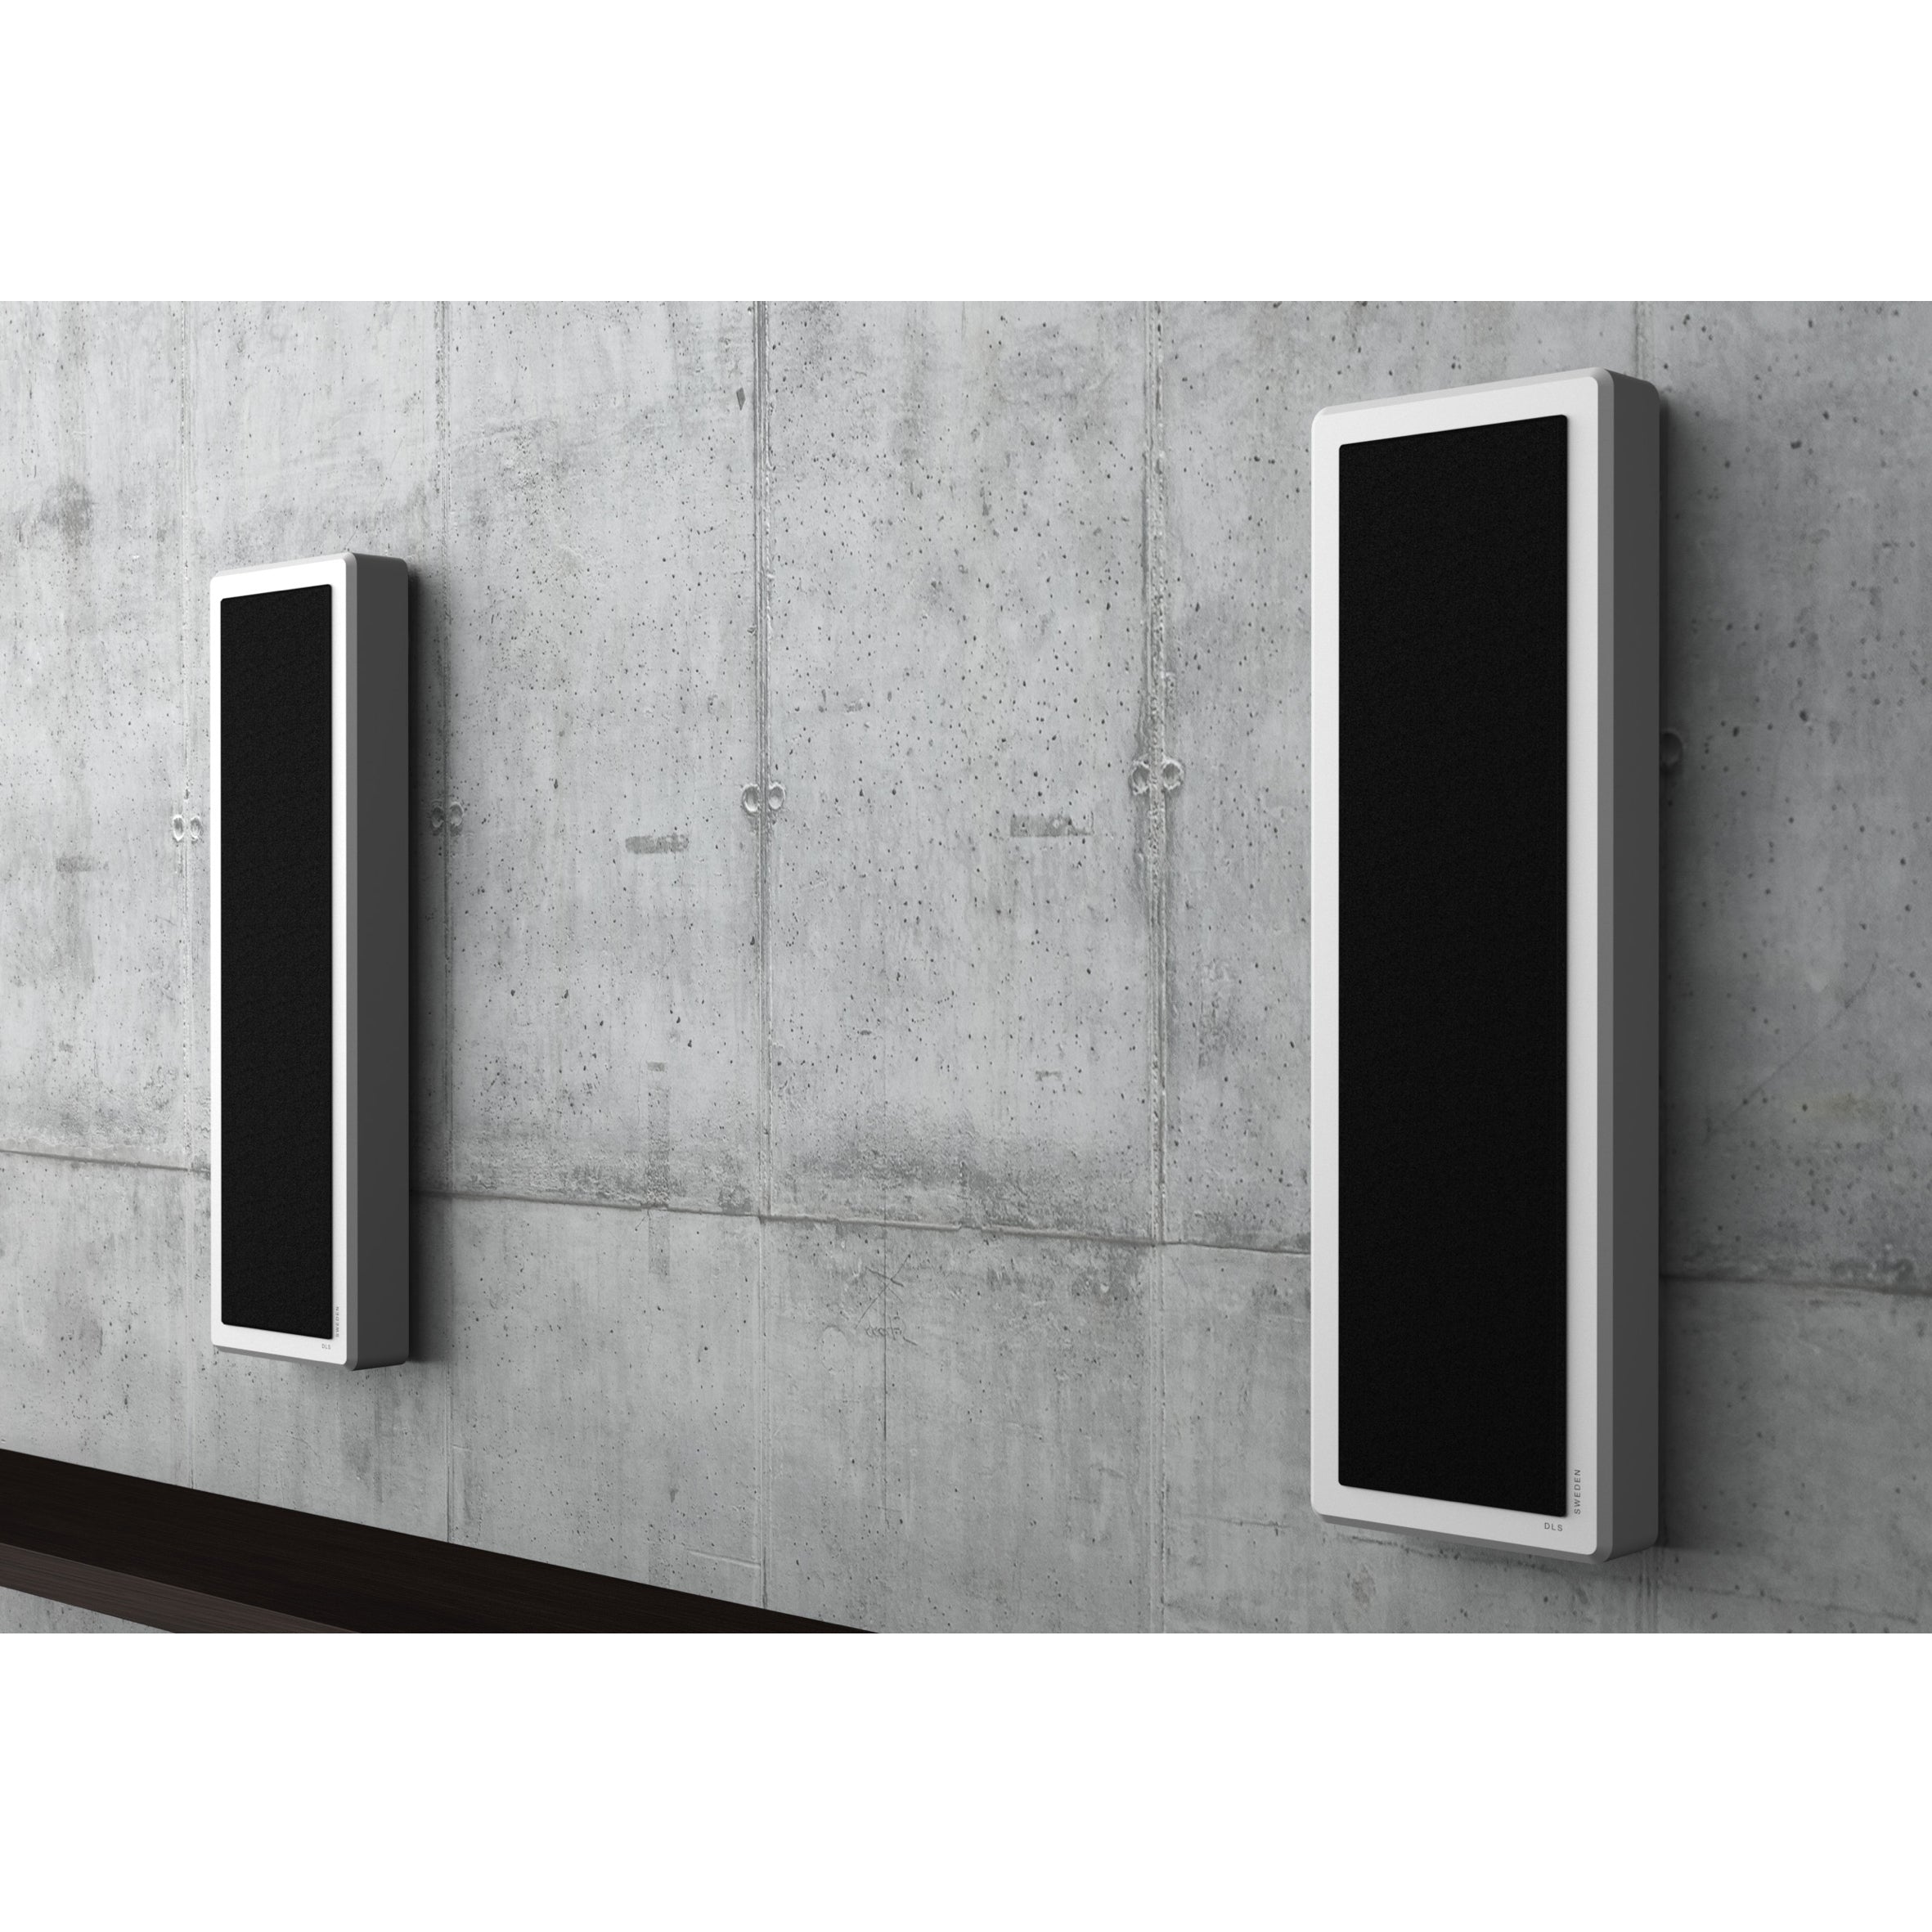 DLS Flatbox M-Two - On-wall Speaker - Pair - AVStore